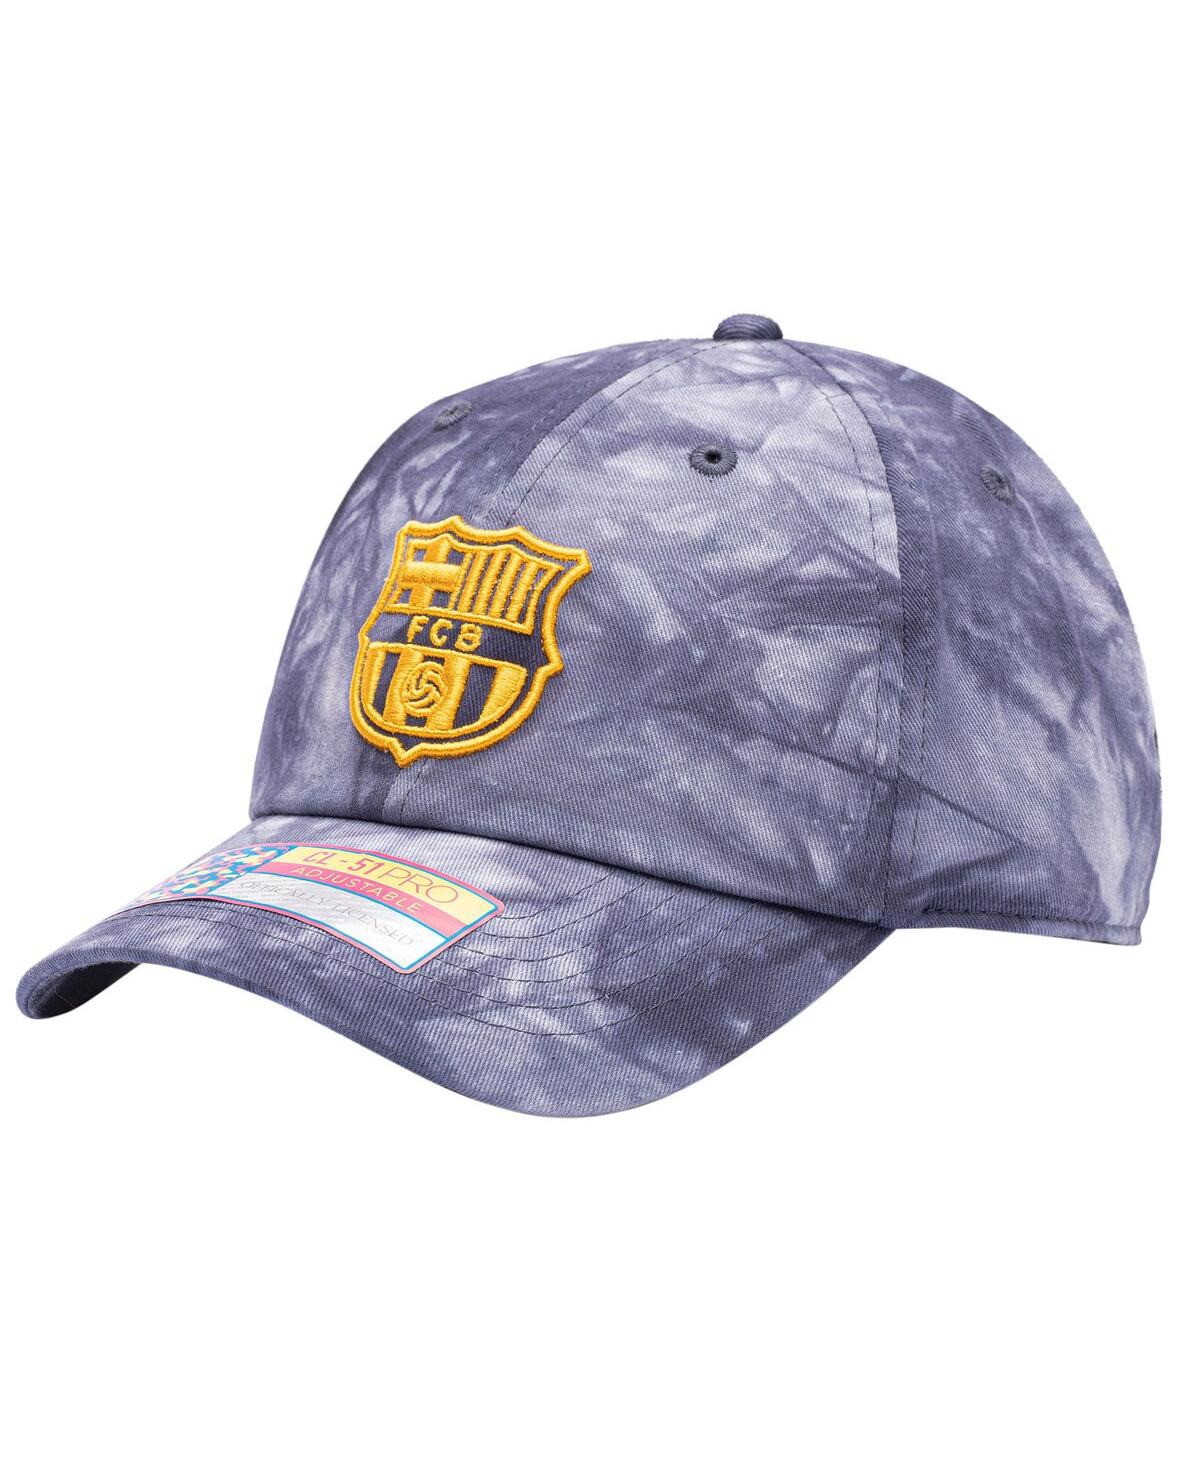 Shop Fan Ink Men's Navy Barcelona Bloom Adjustable Hat